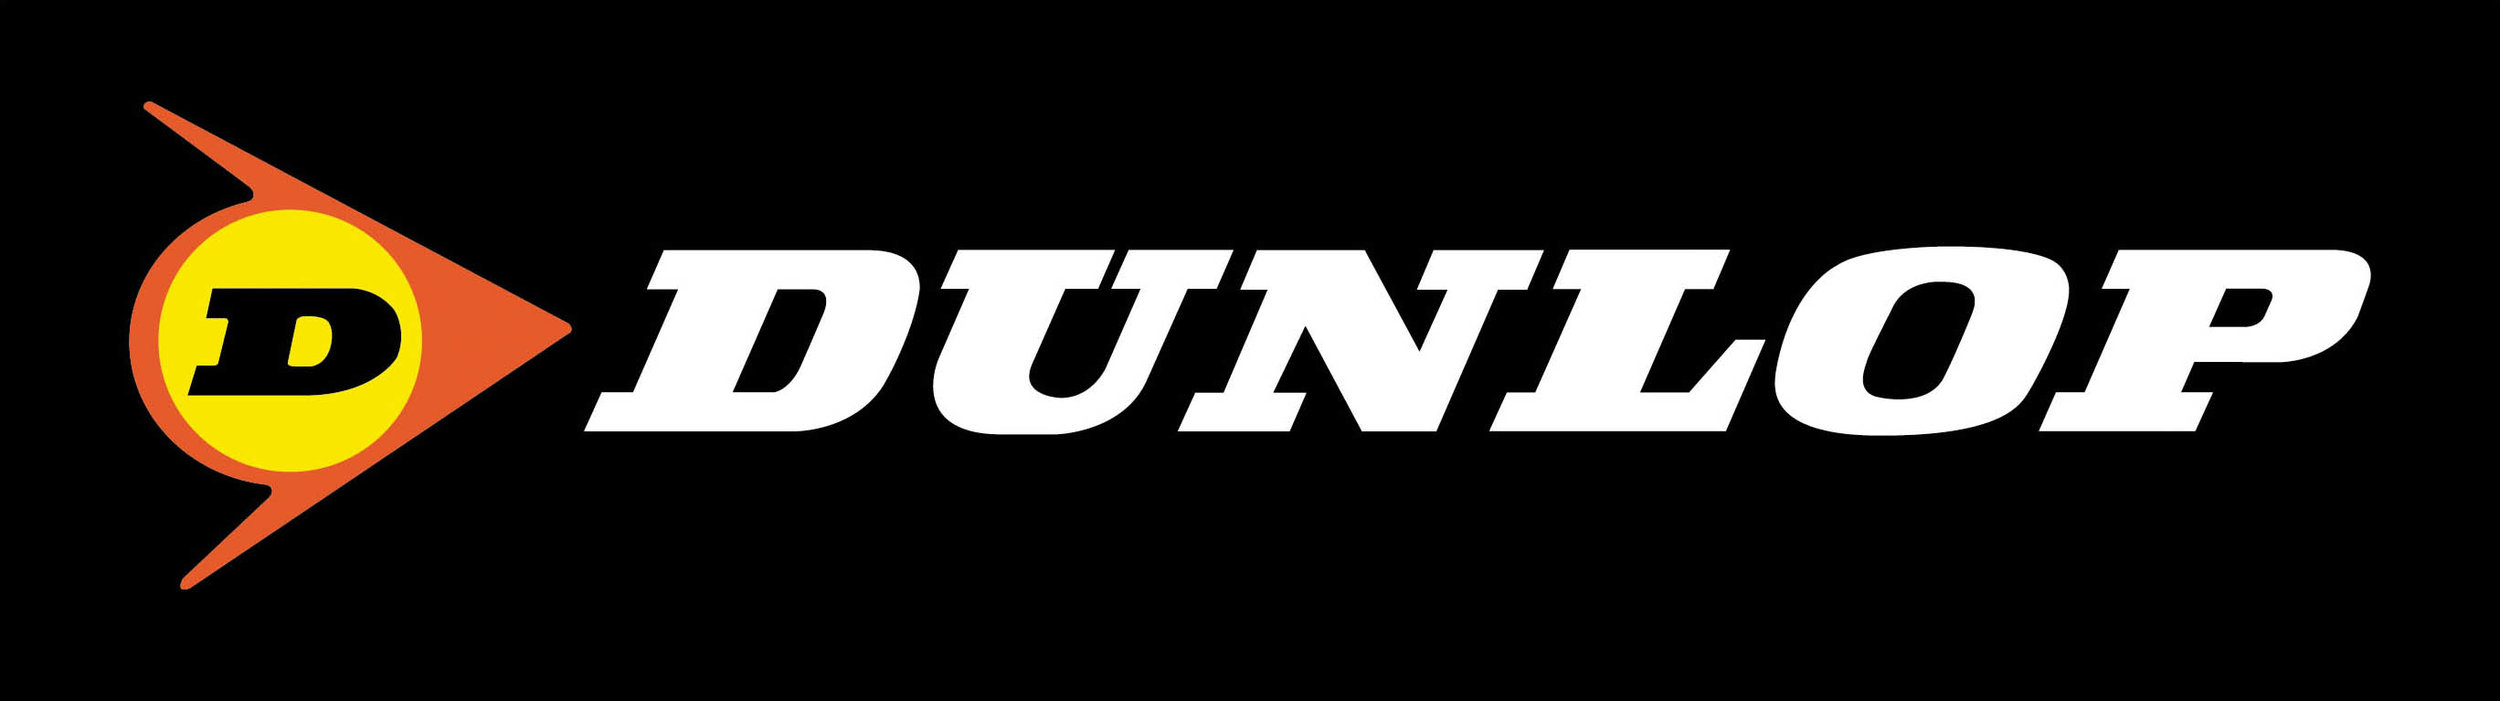 Dunlop_Logo2.jpg